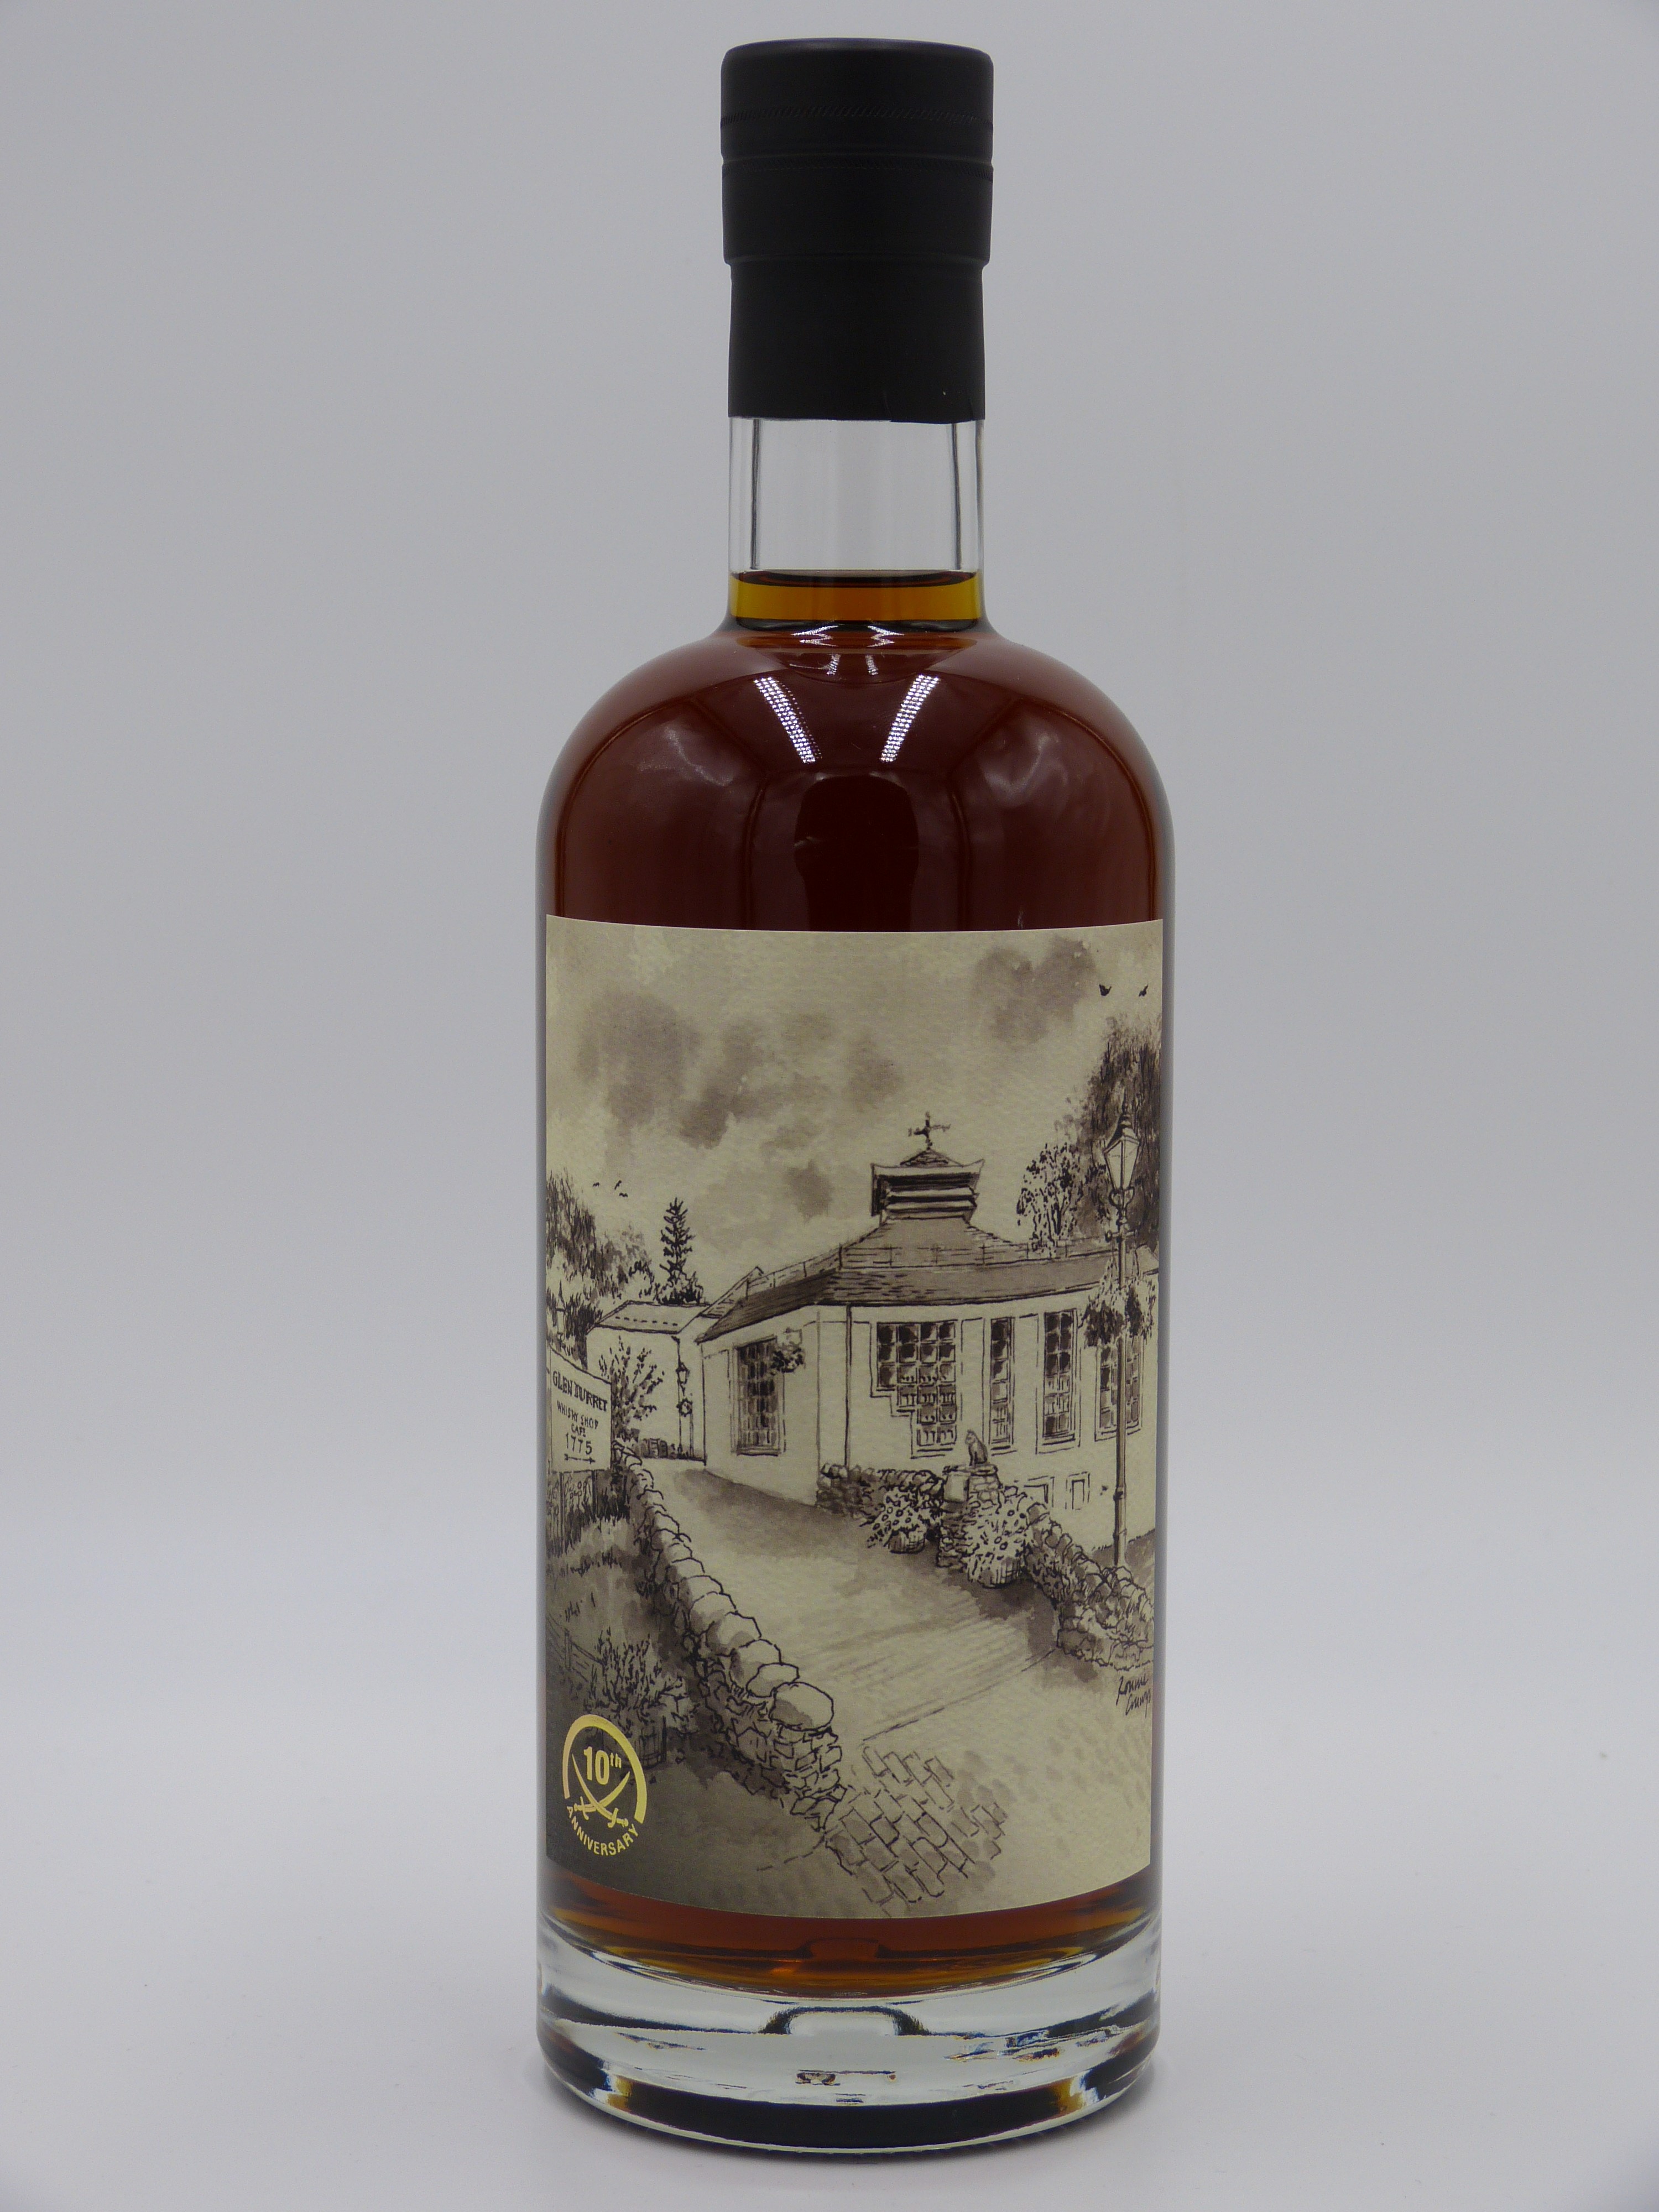 Glenturret 30y - 10th Anniversary Bottling by Sansibar Whisky